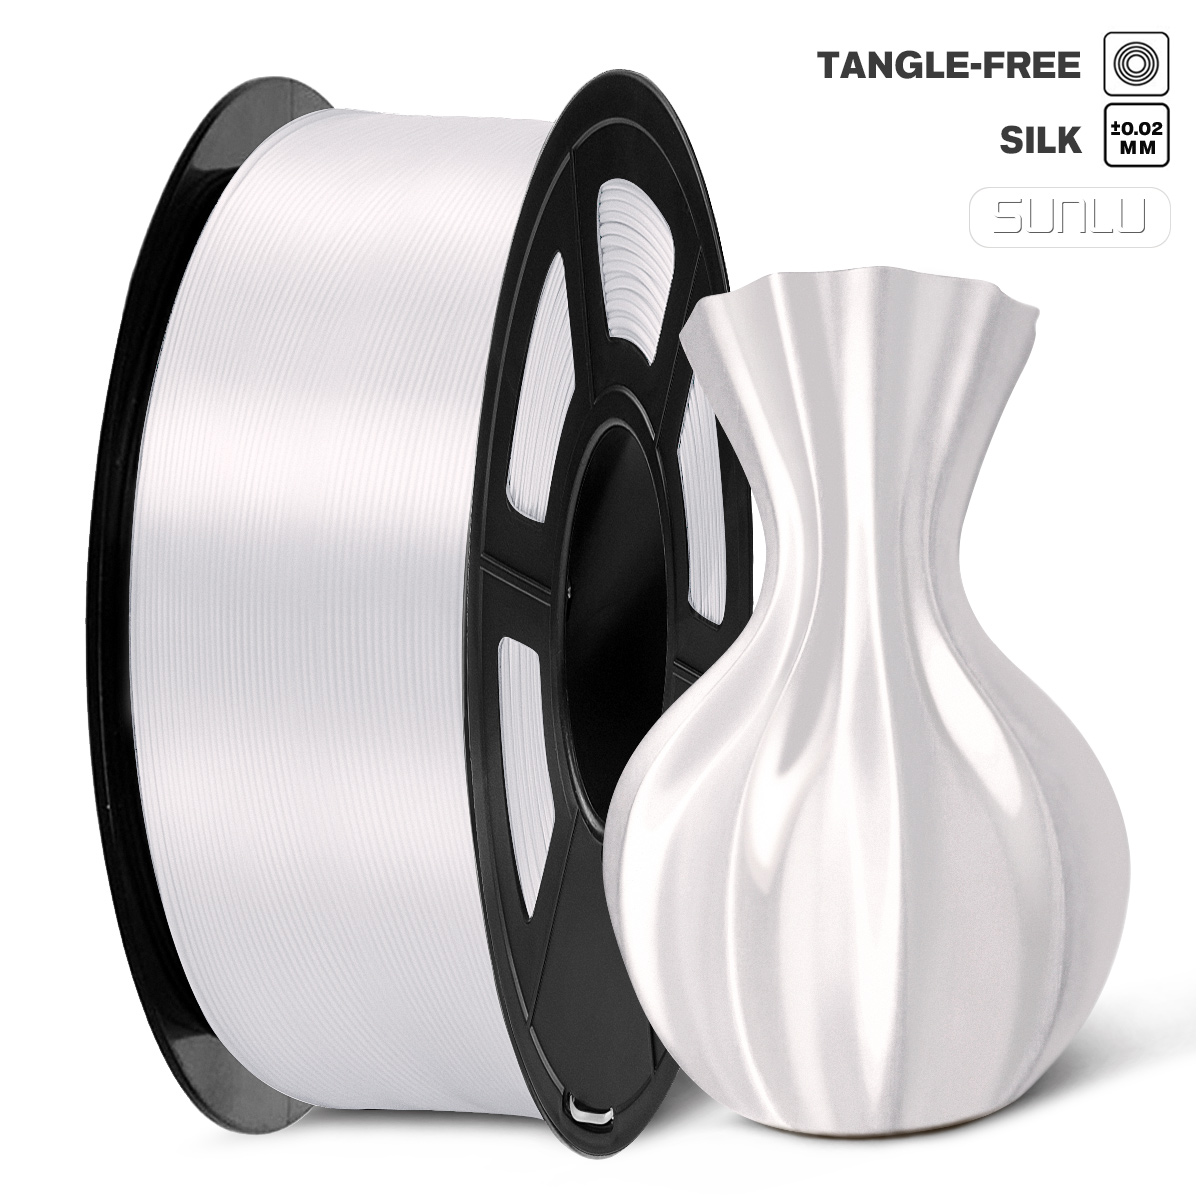 SUNLU-1KG-Silk-PLA-175MM-Filament-14-Color-Available-High-Strength-filament-for-3D-Printer-1729479-1